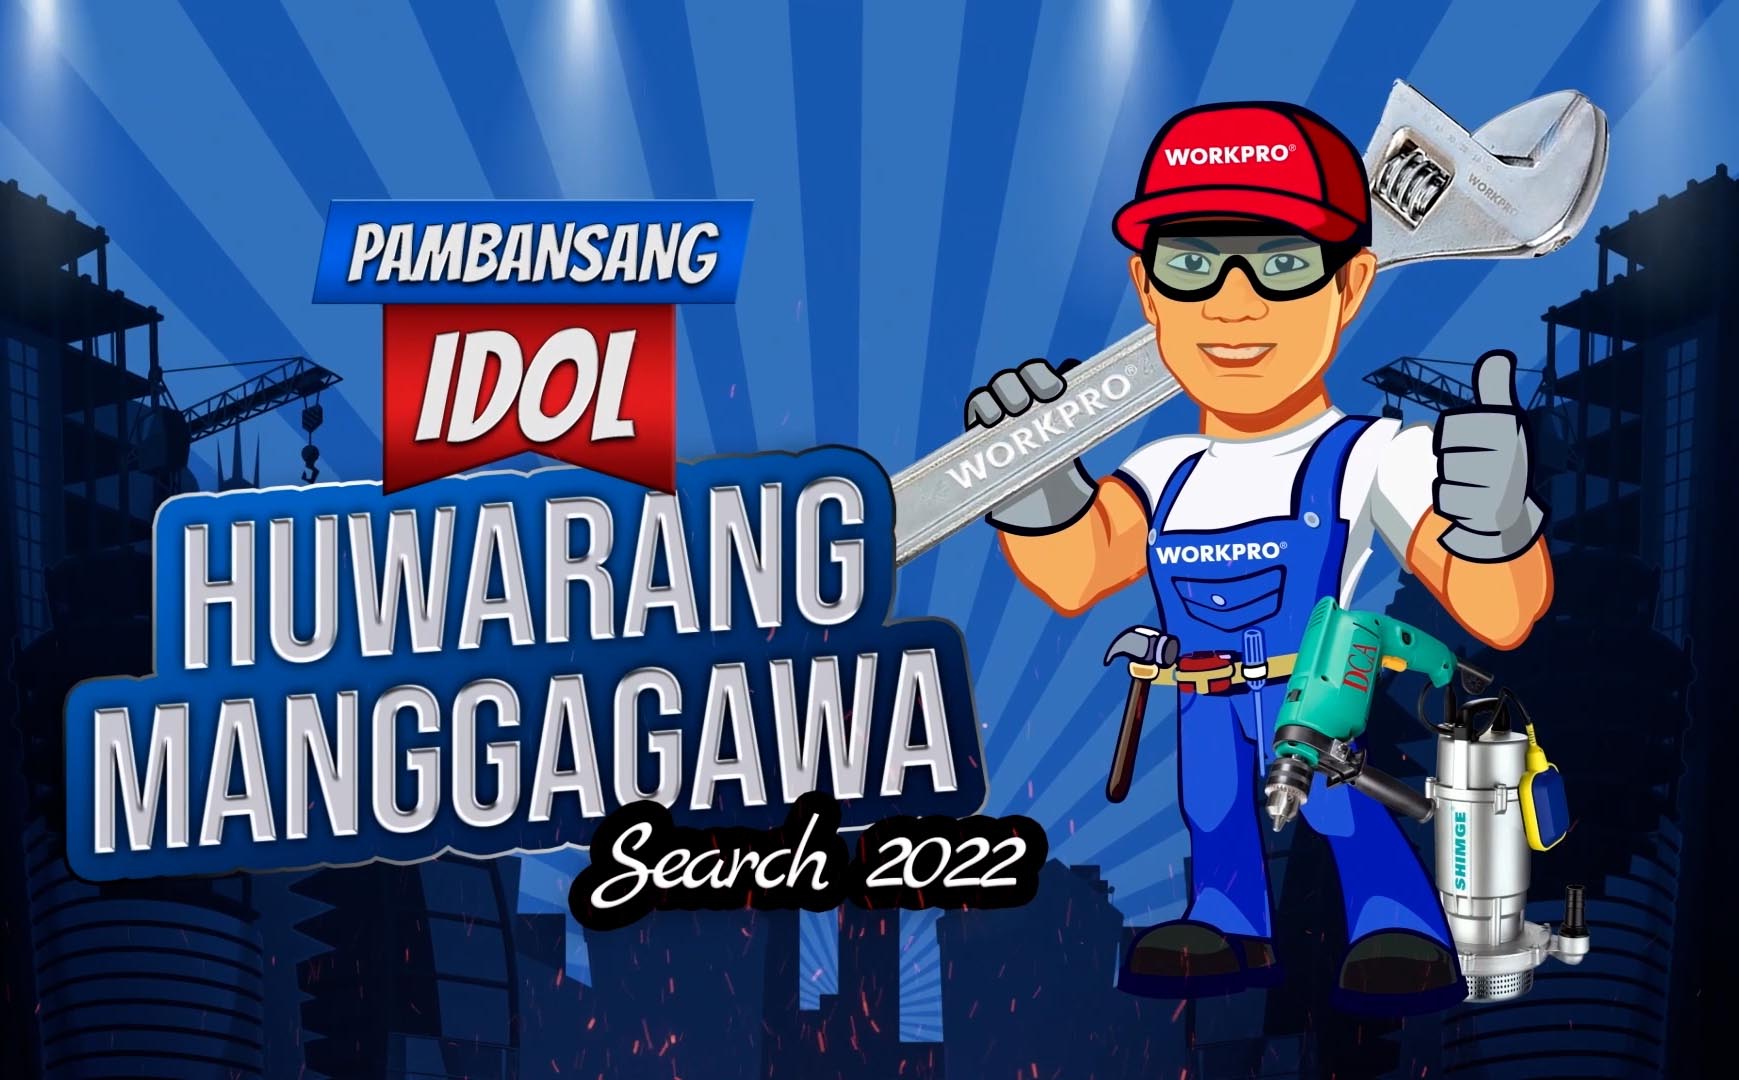 “Pambansang Idol” Huwarang Manggagawa Search 2022” pays tribute to model skilled laborers in the country